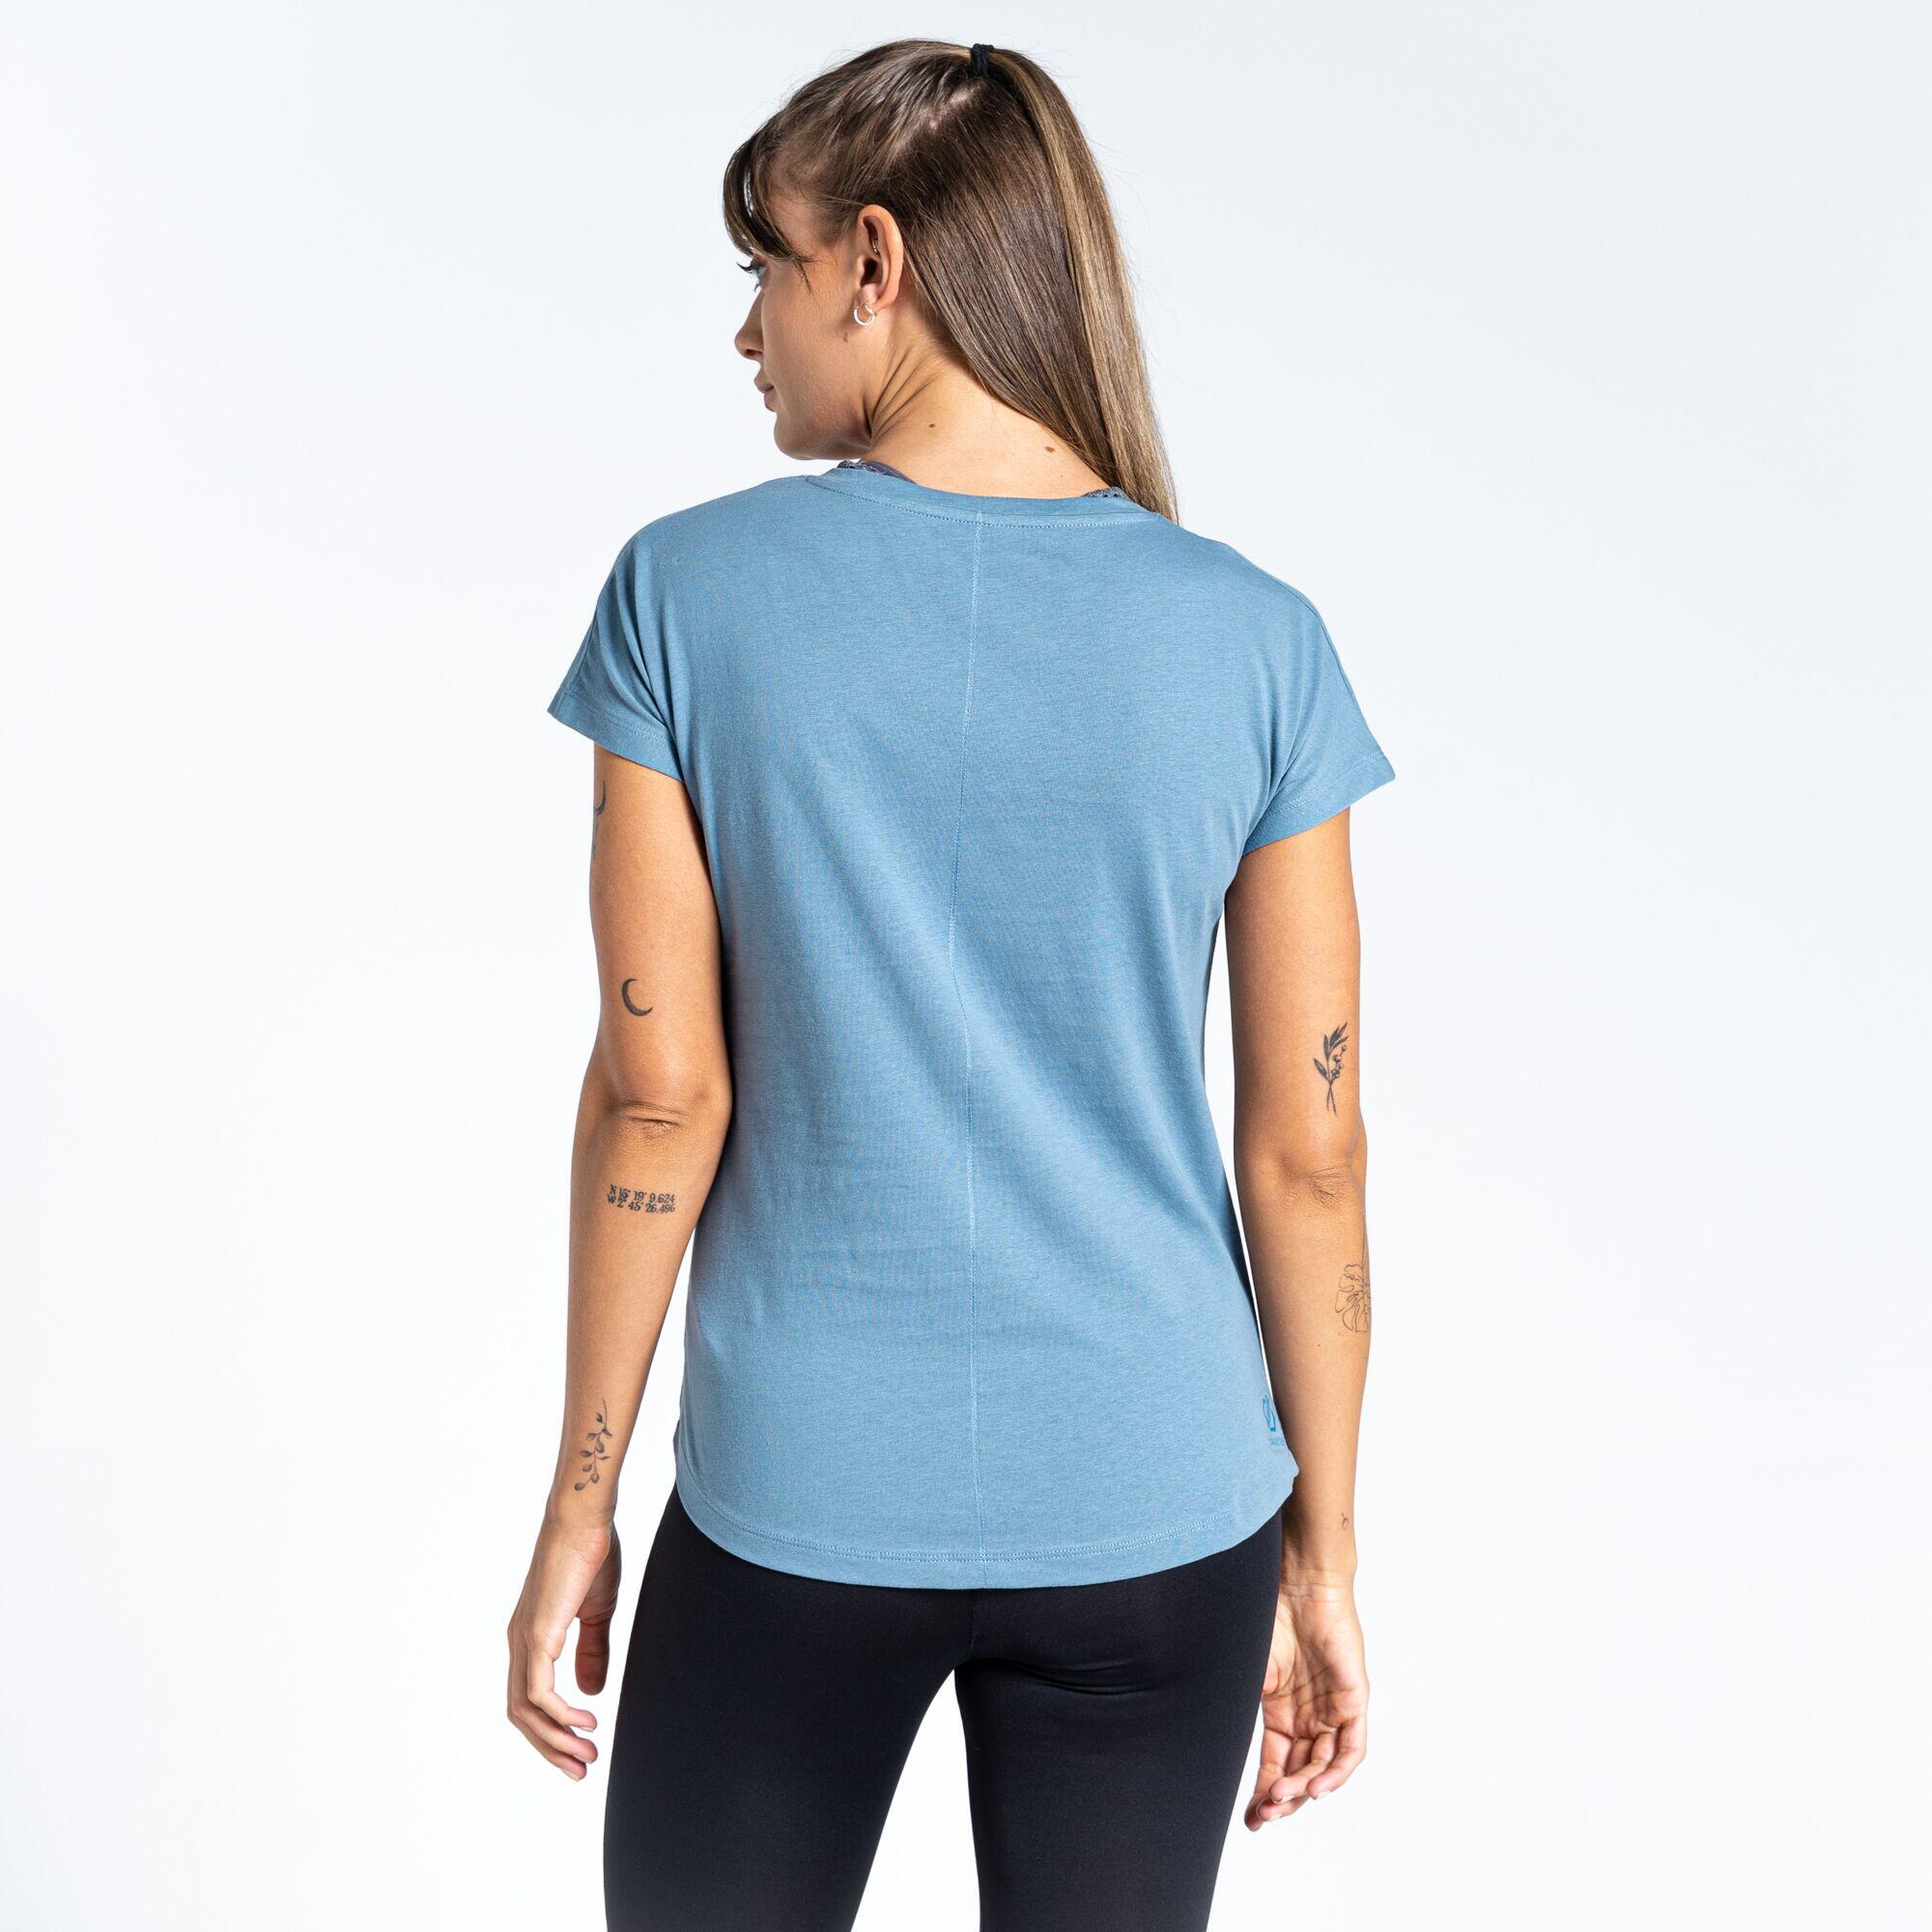 Moments II Women's Fitness Short Sleeve T-Shirt - Blue Stone 3/5